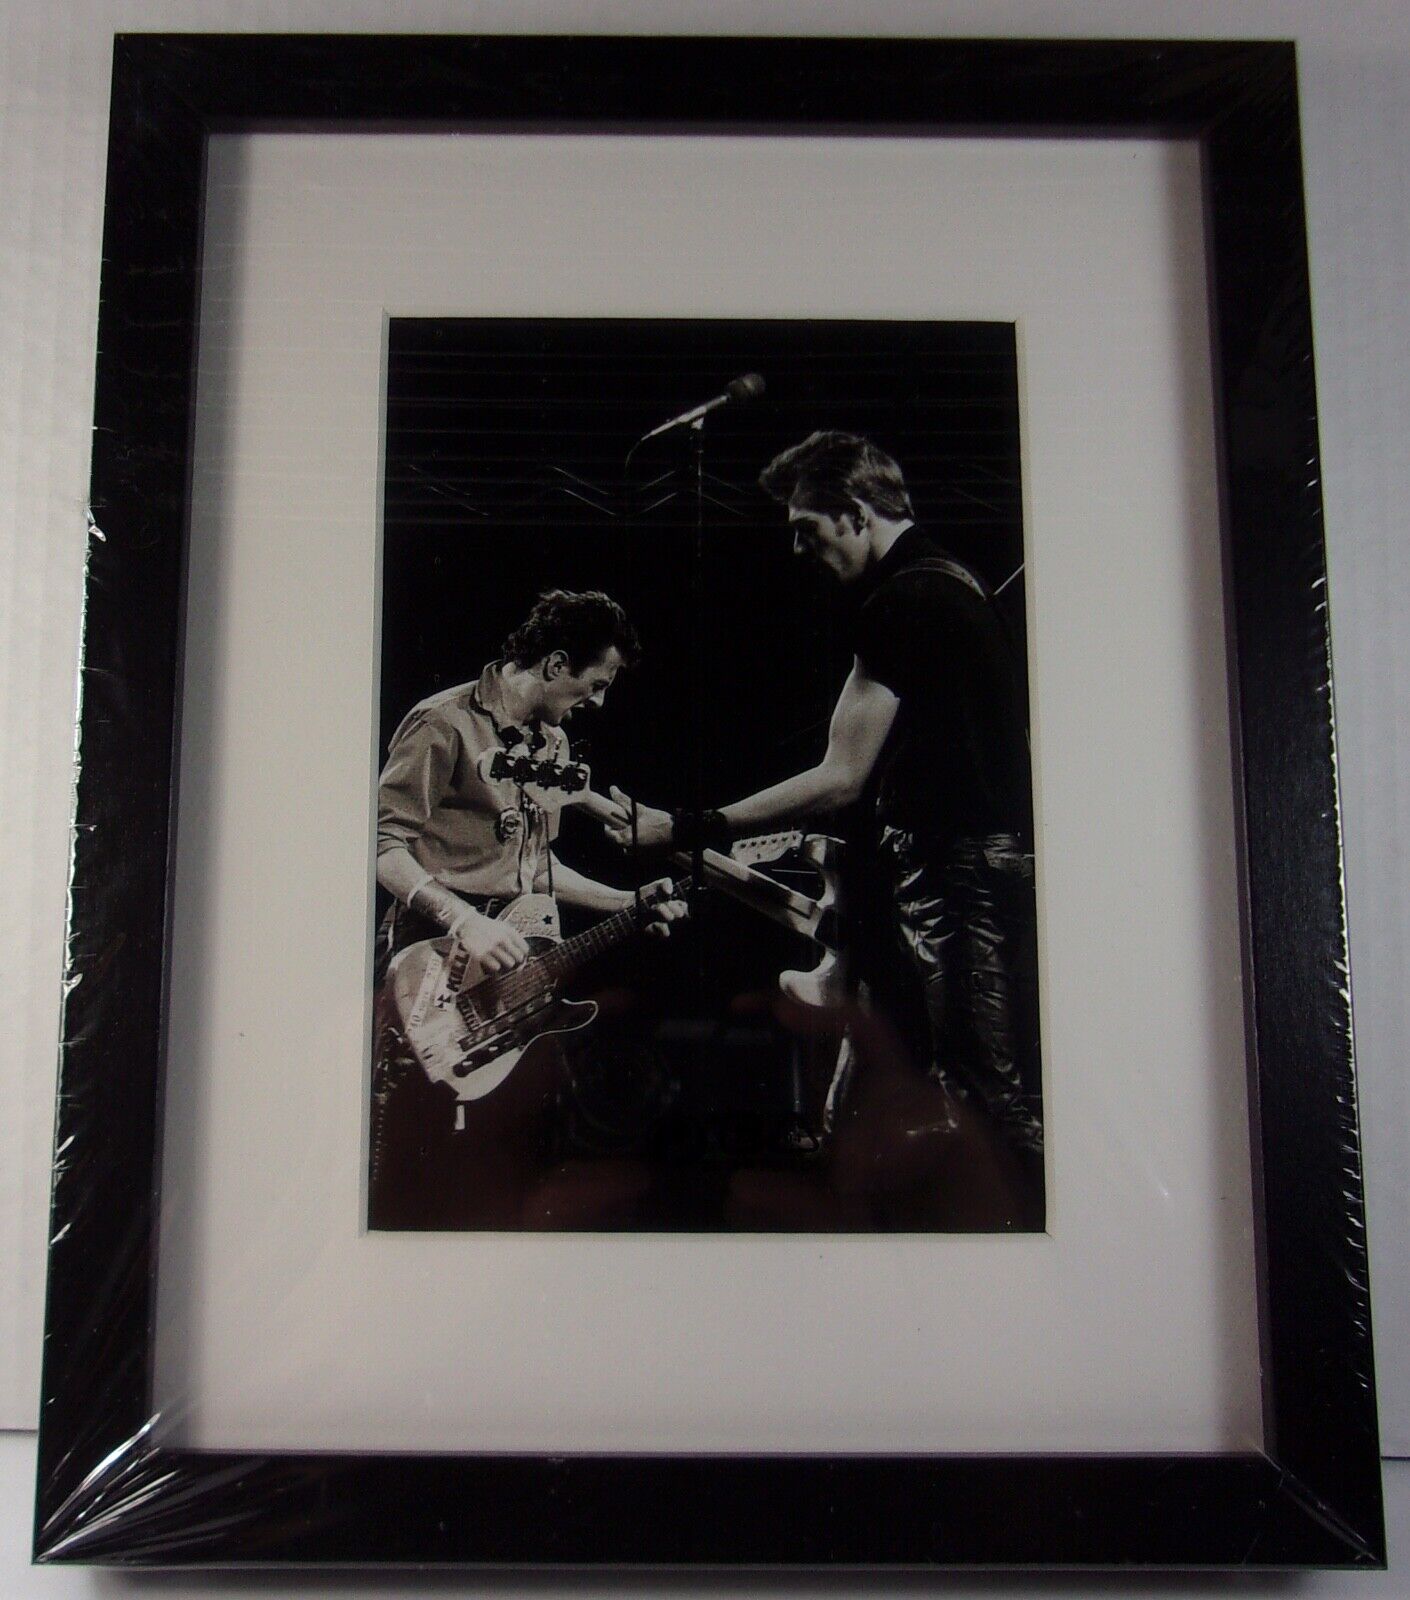 Joe Strummer & Paul Simonon Of The Clash Framed 5 X 7 Photograph 1979 Punk Rock